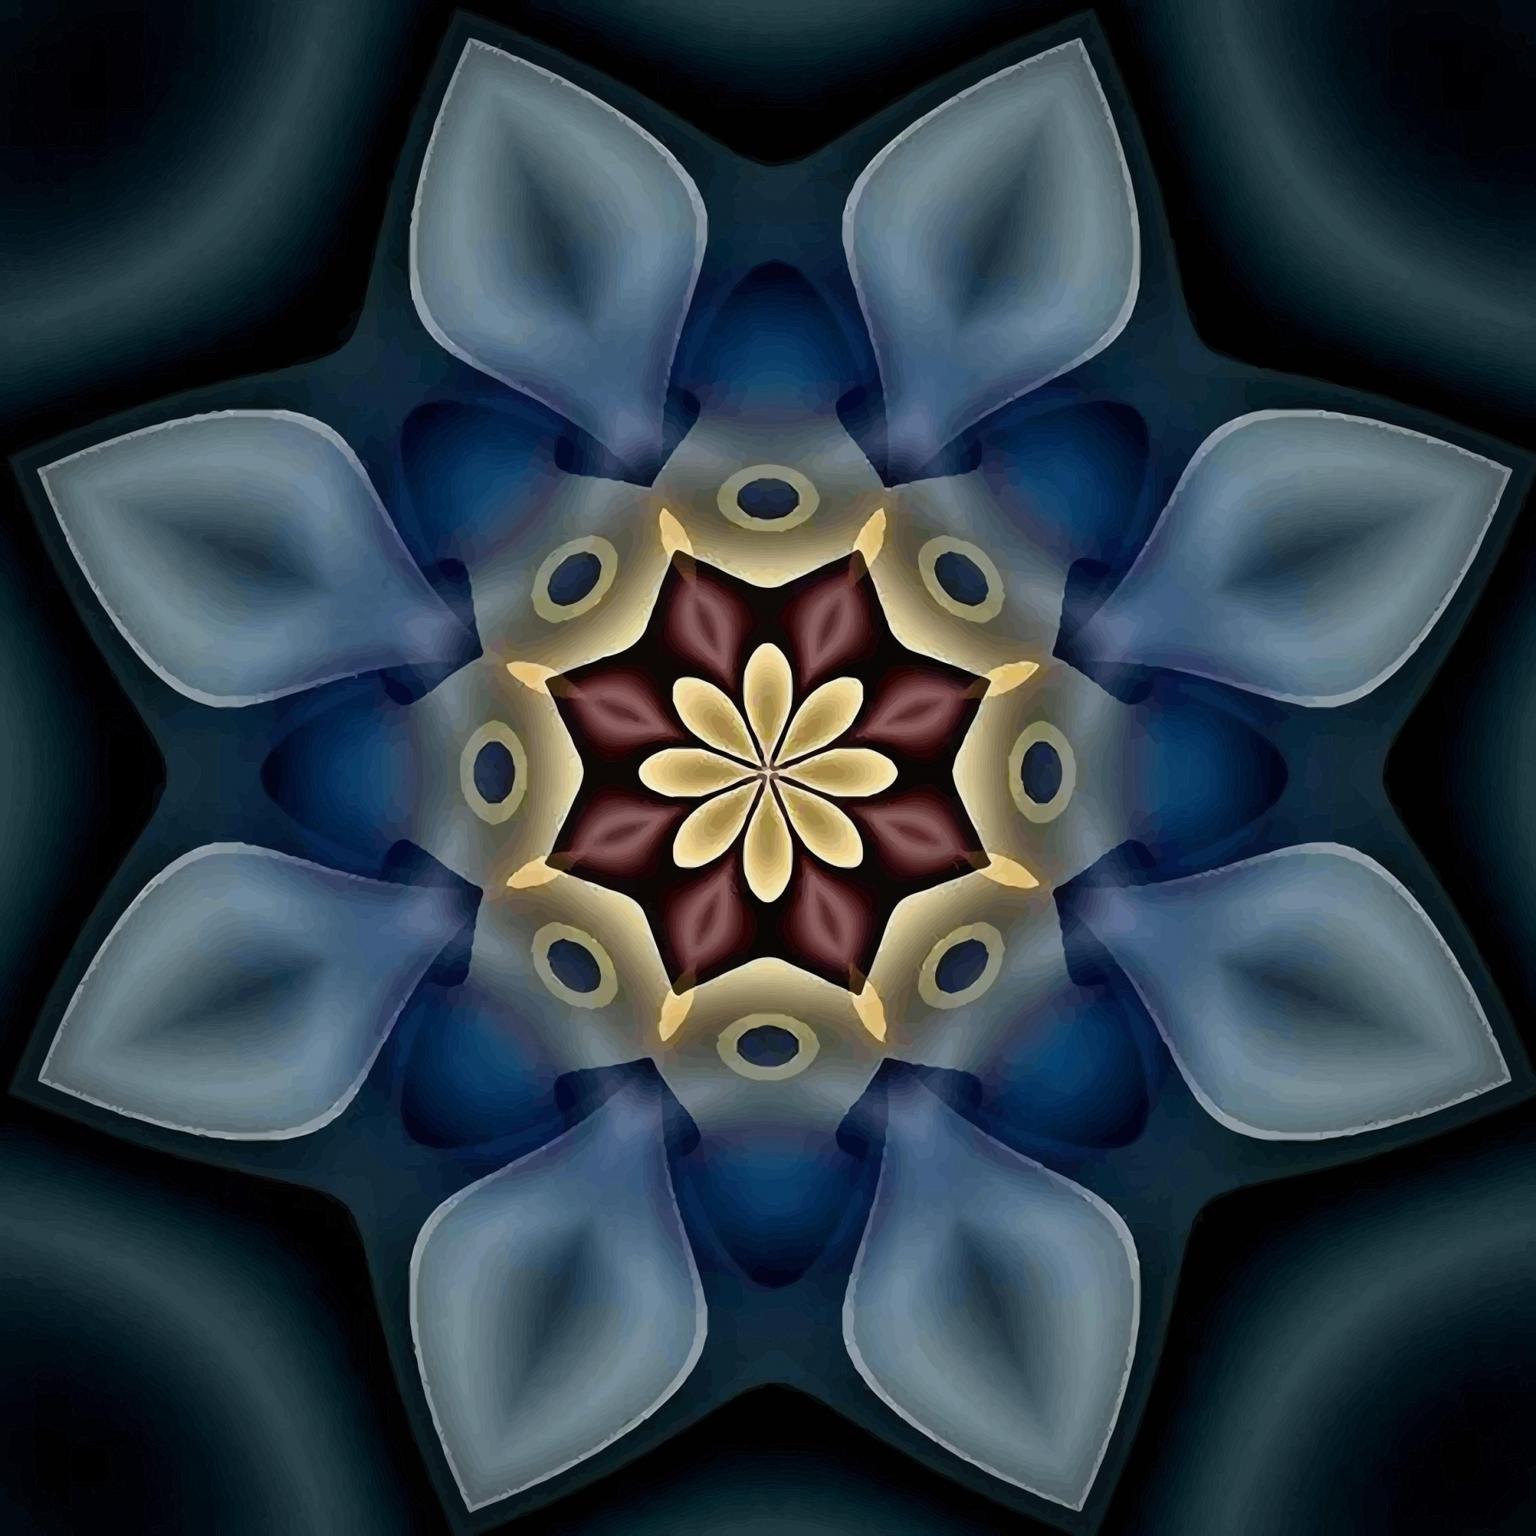 Image for entry 'Flower'